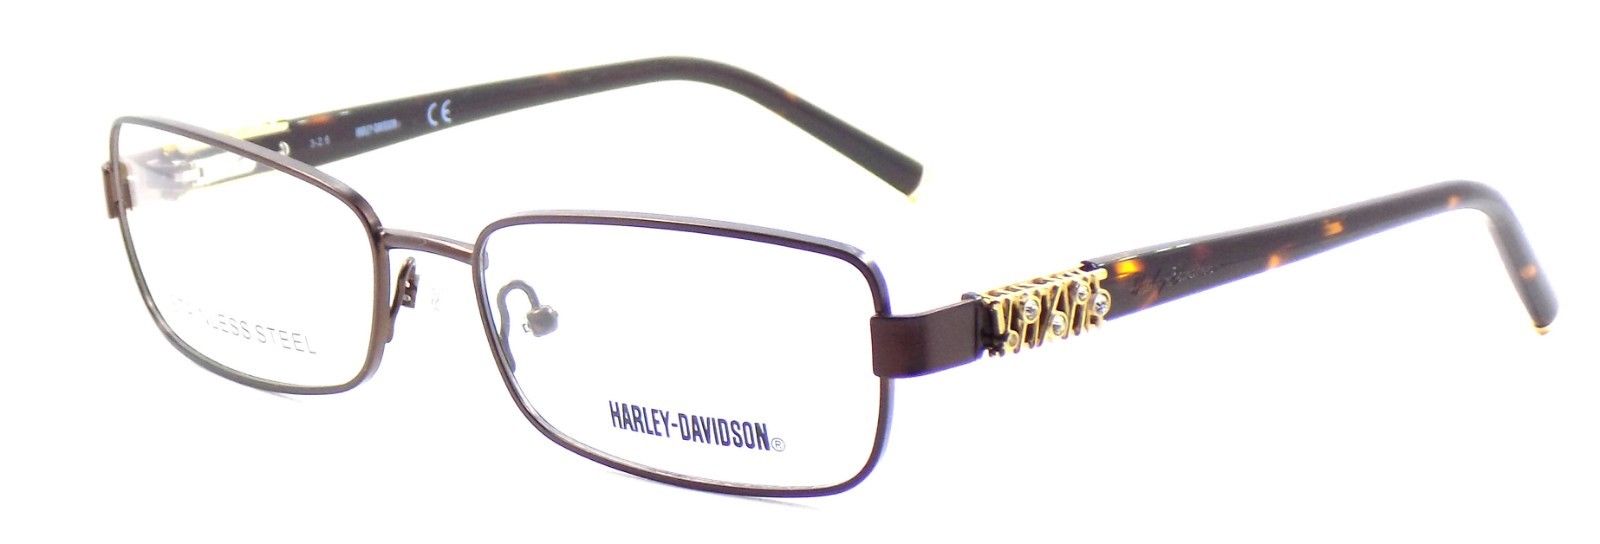 1-Harley Davidson HD0536 049 Women's Eyeglasses Frames 53-16-135 Dark Brown + Case-664689866977-IKSpecs